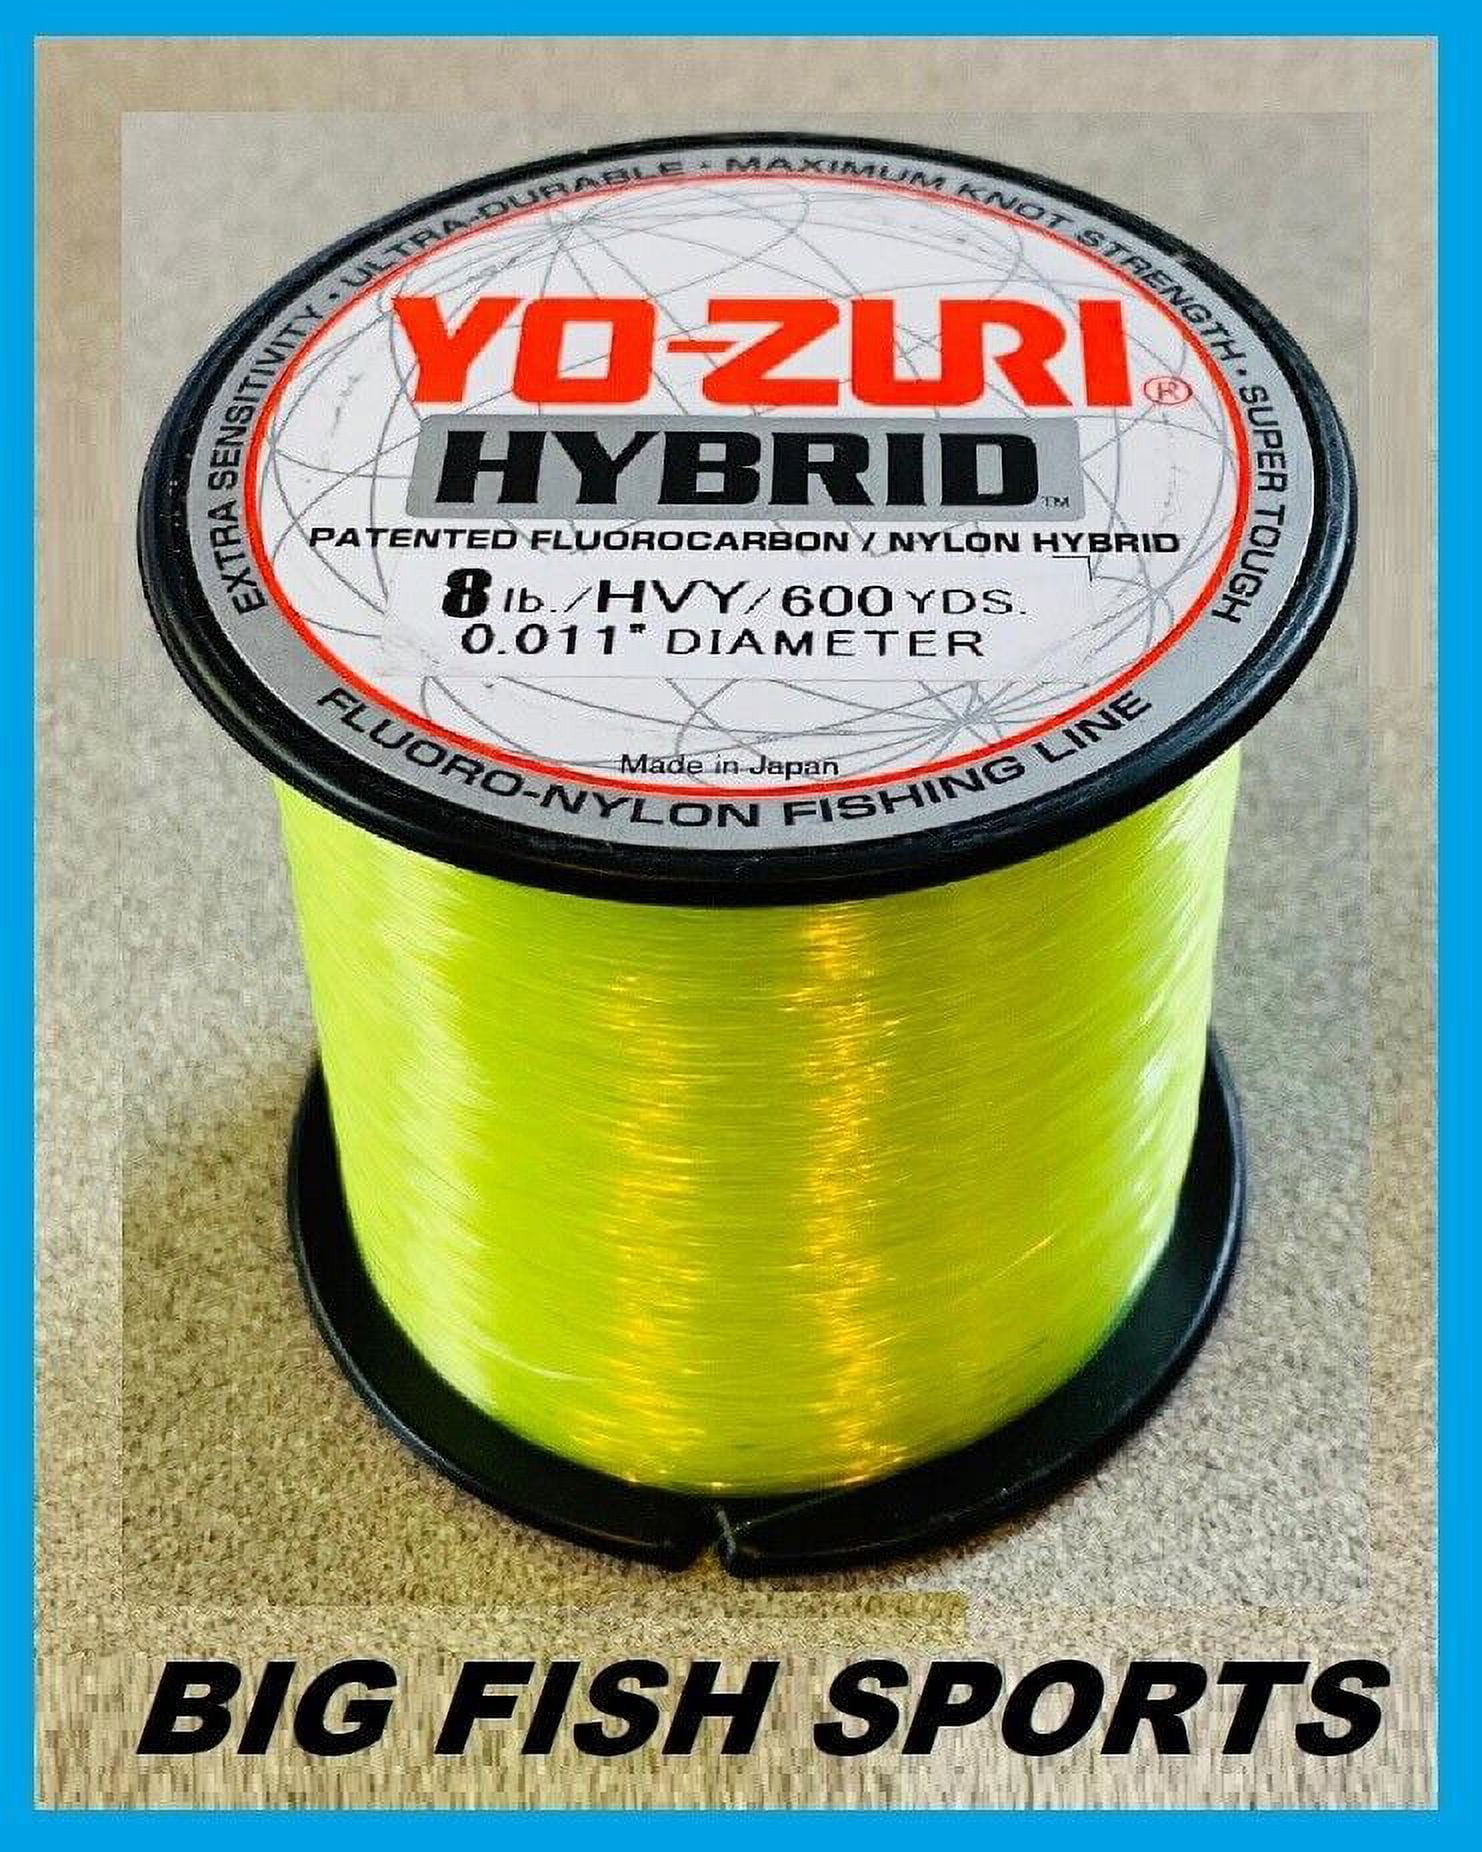 YO-ZURI HYBRID Fluorocarbon Fishing Line 8lb/600yd HIVIS NEW